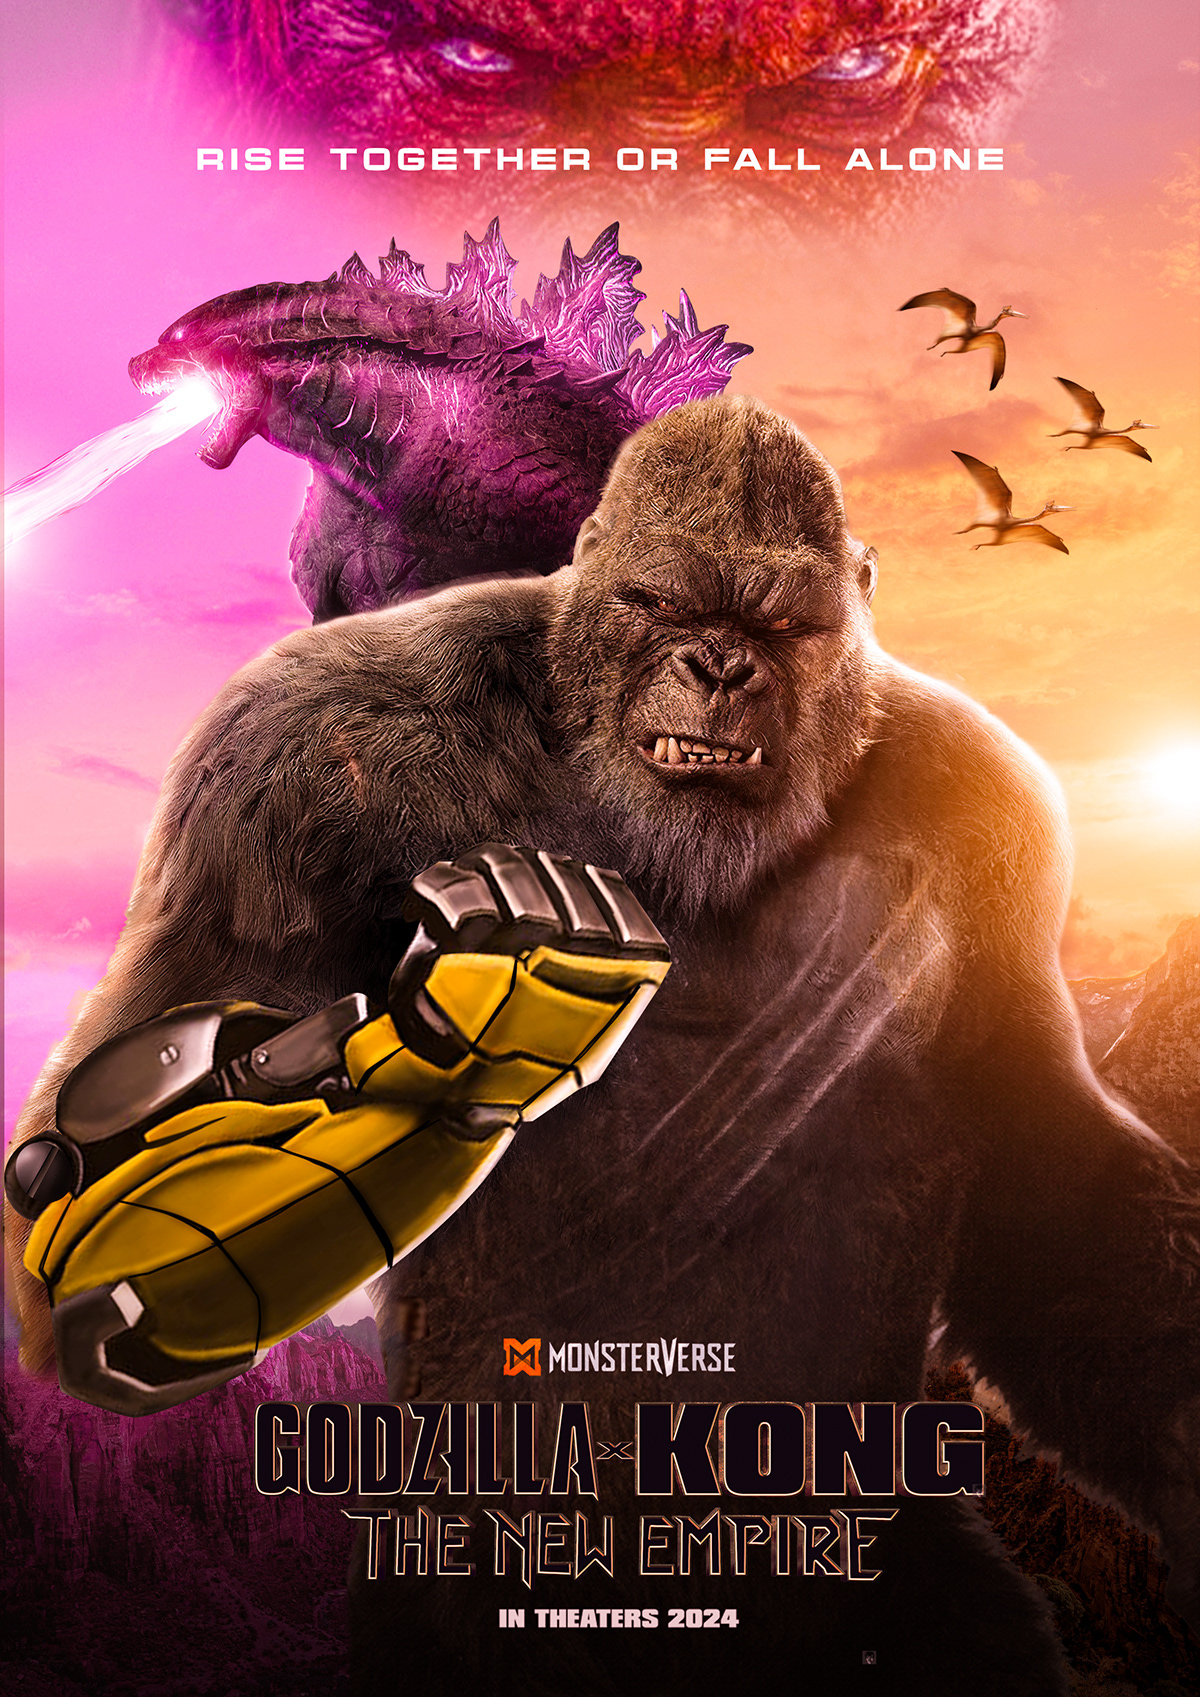 poster Poster Design poster art fanart photoshop Adobe Photoshop godzilla kong monster Godzilla vs Kong